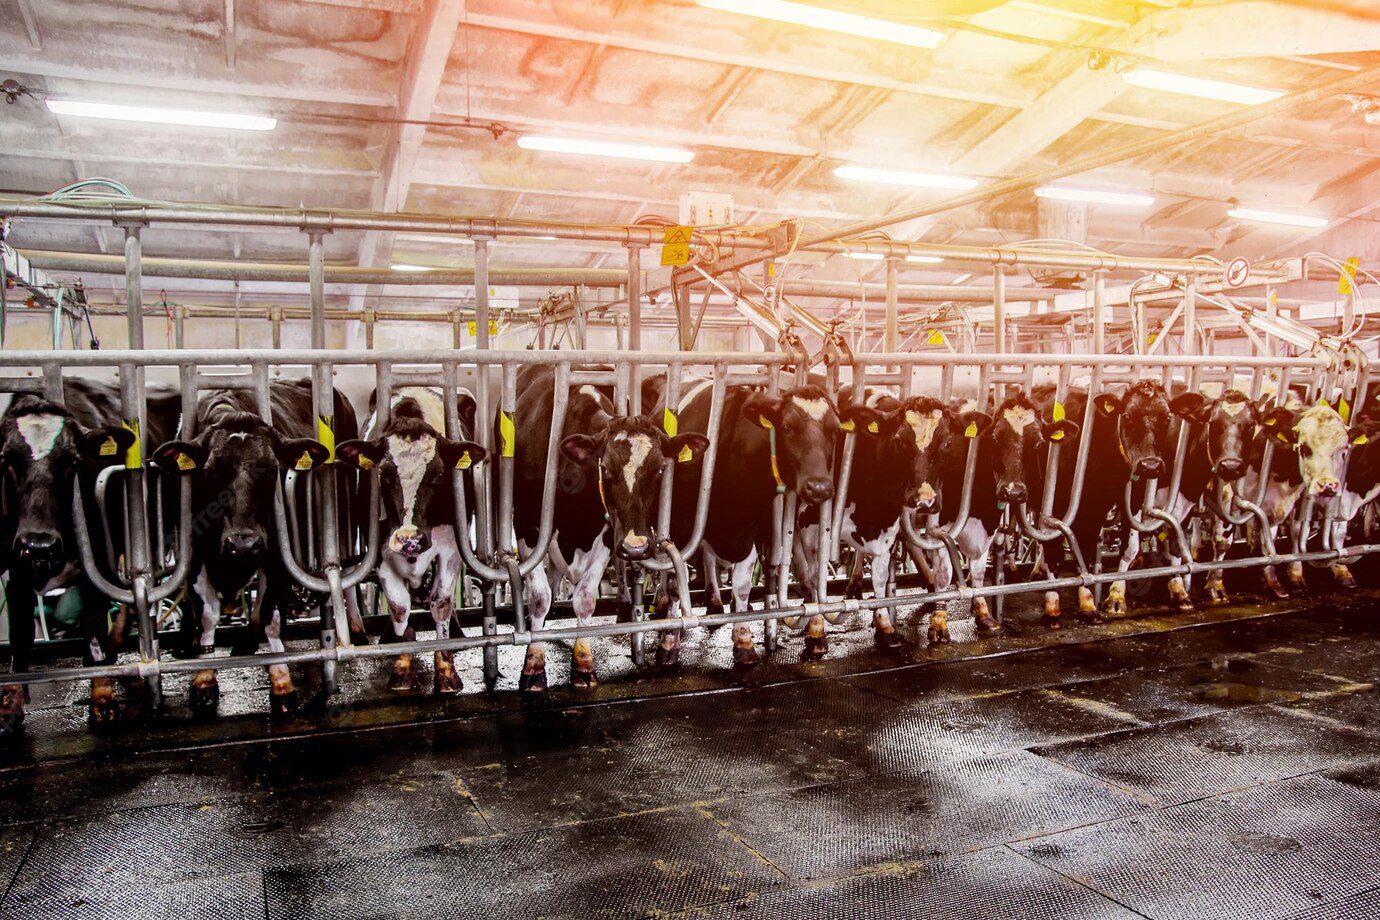 parallel milking parlor شیر دوشی - نتایج جستجو فیلتر